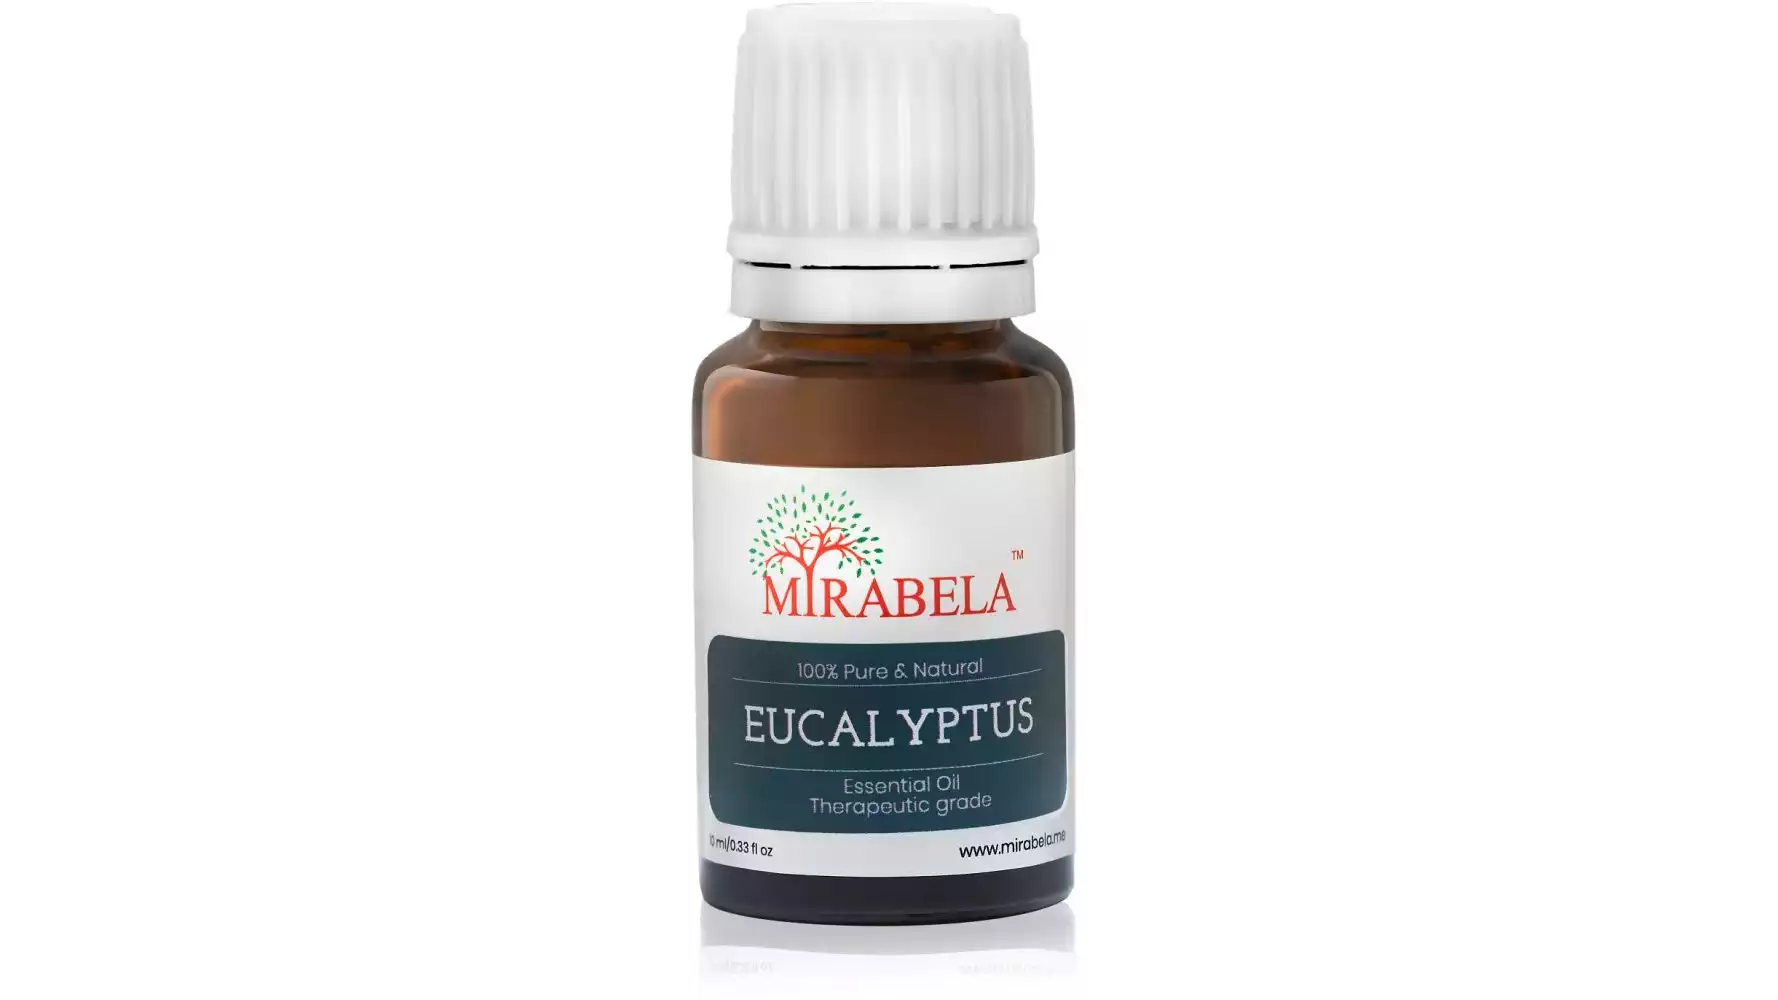 Mirabela Eucalyptus Essential Oil (10ml)